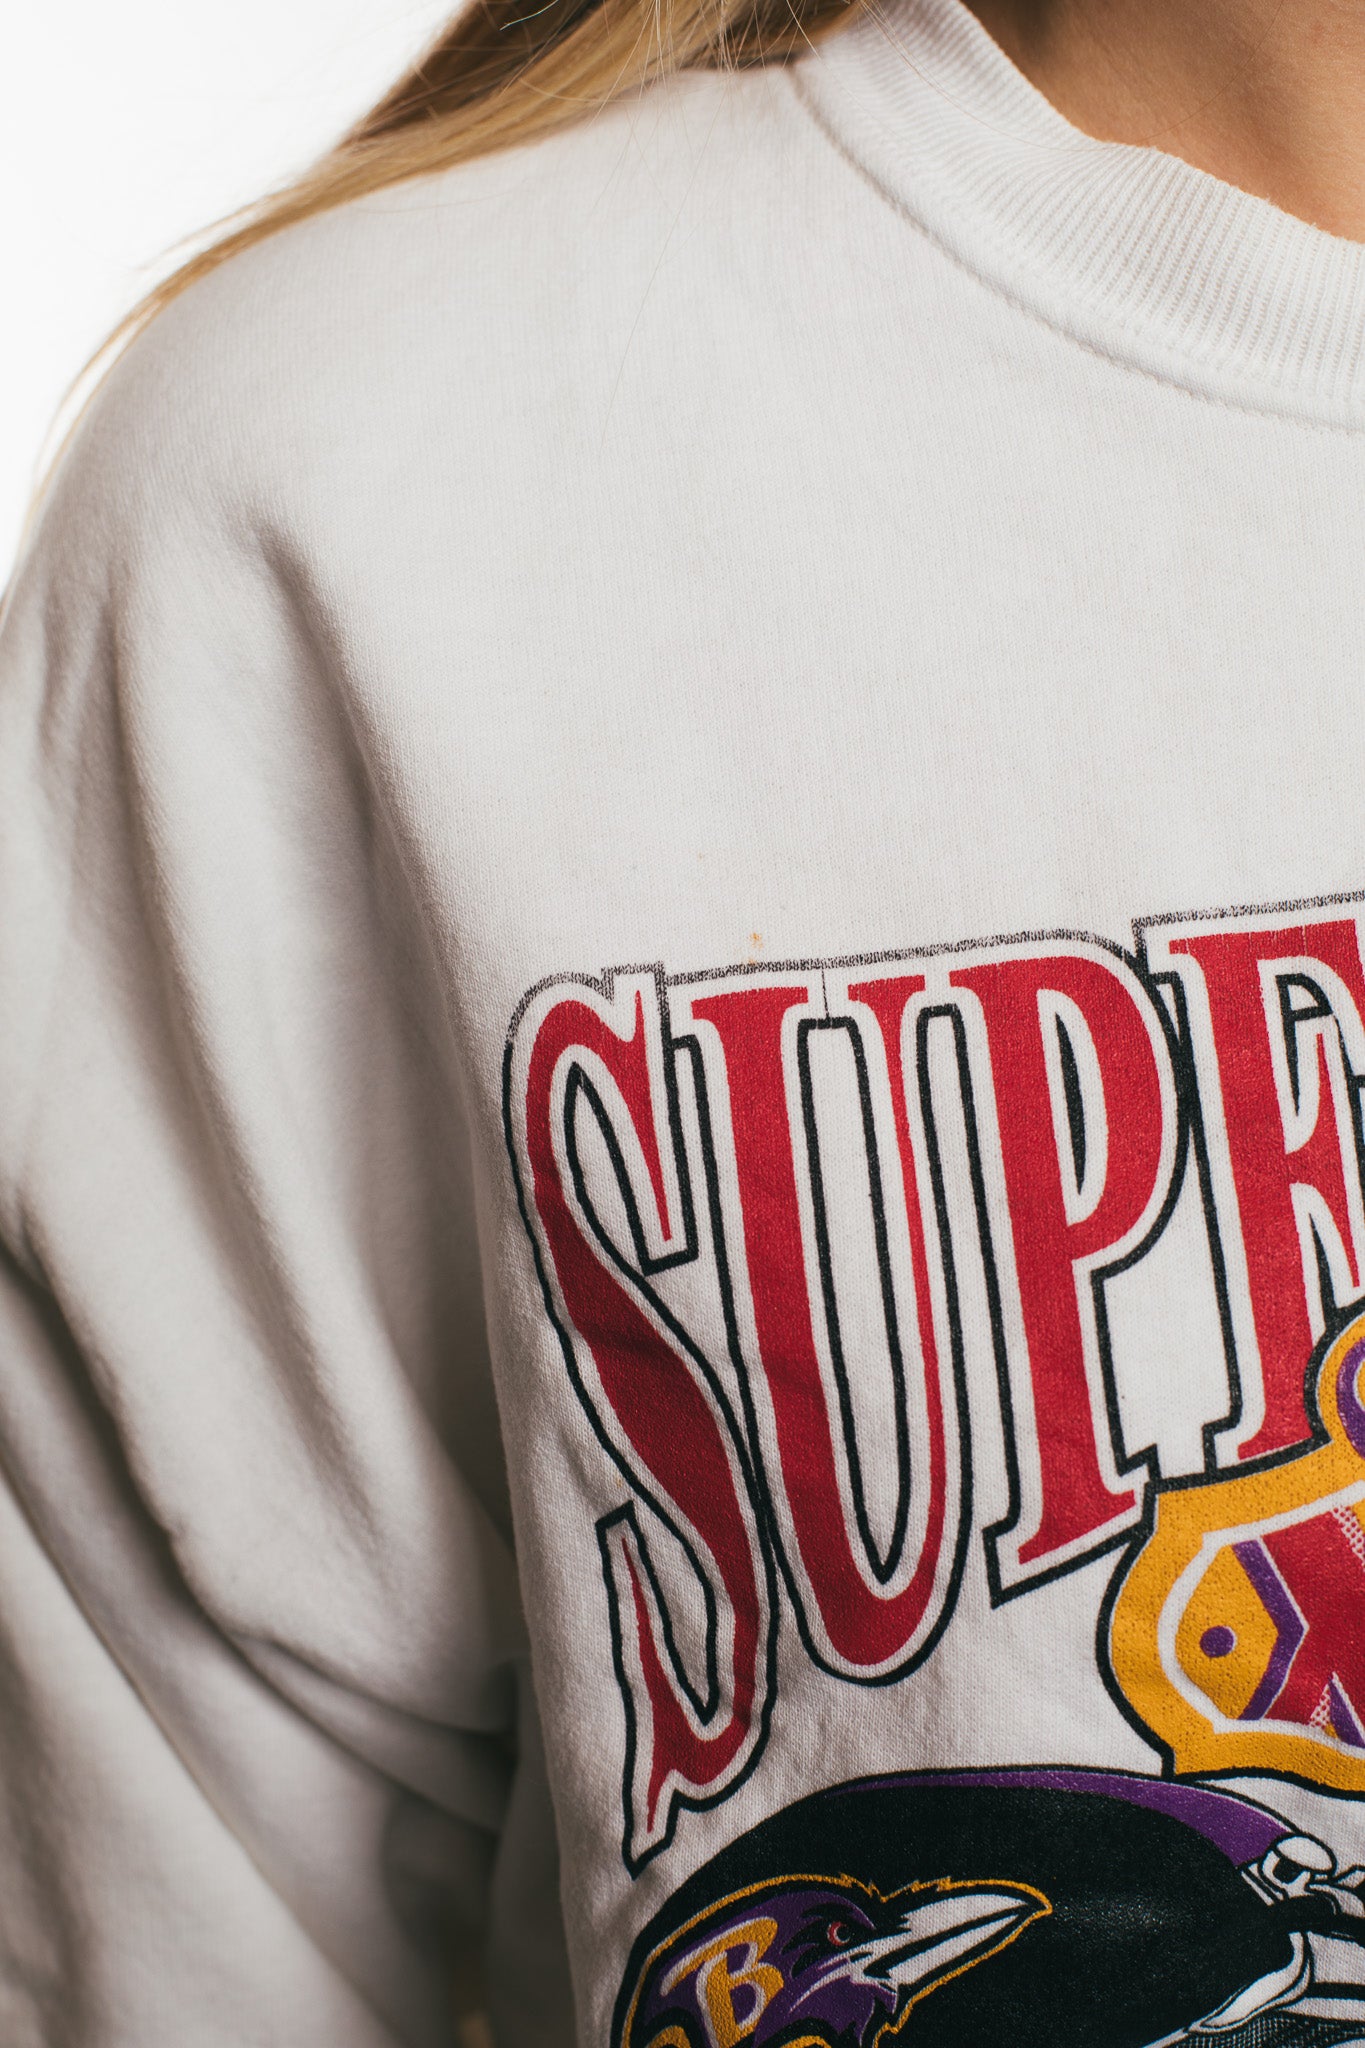 Super Bowl - Sweatshirt